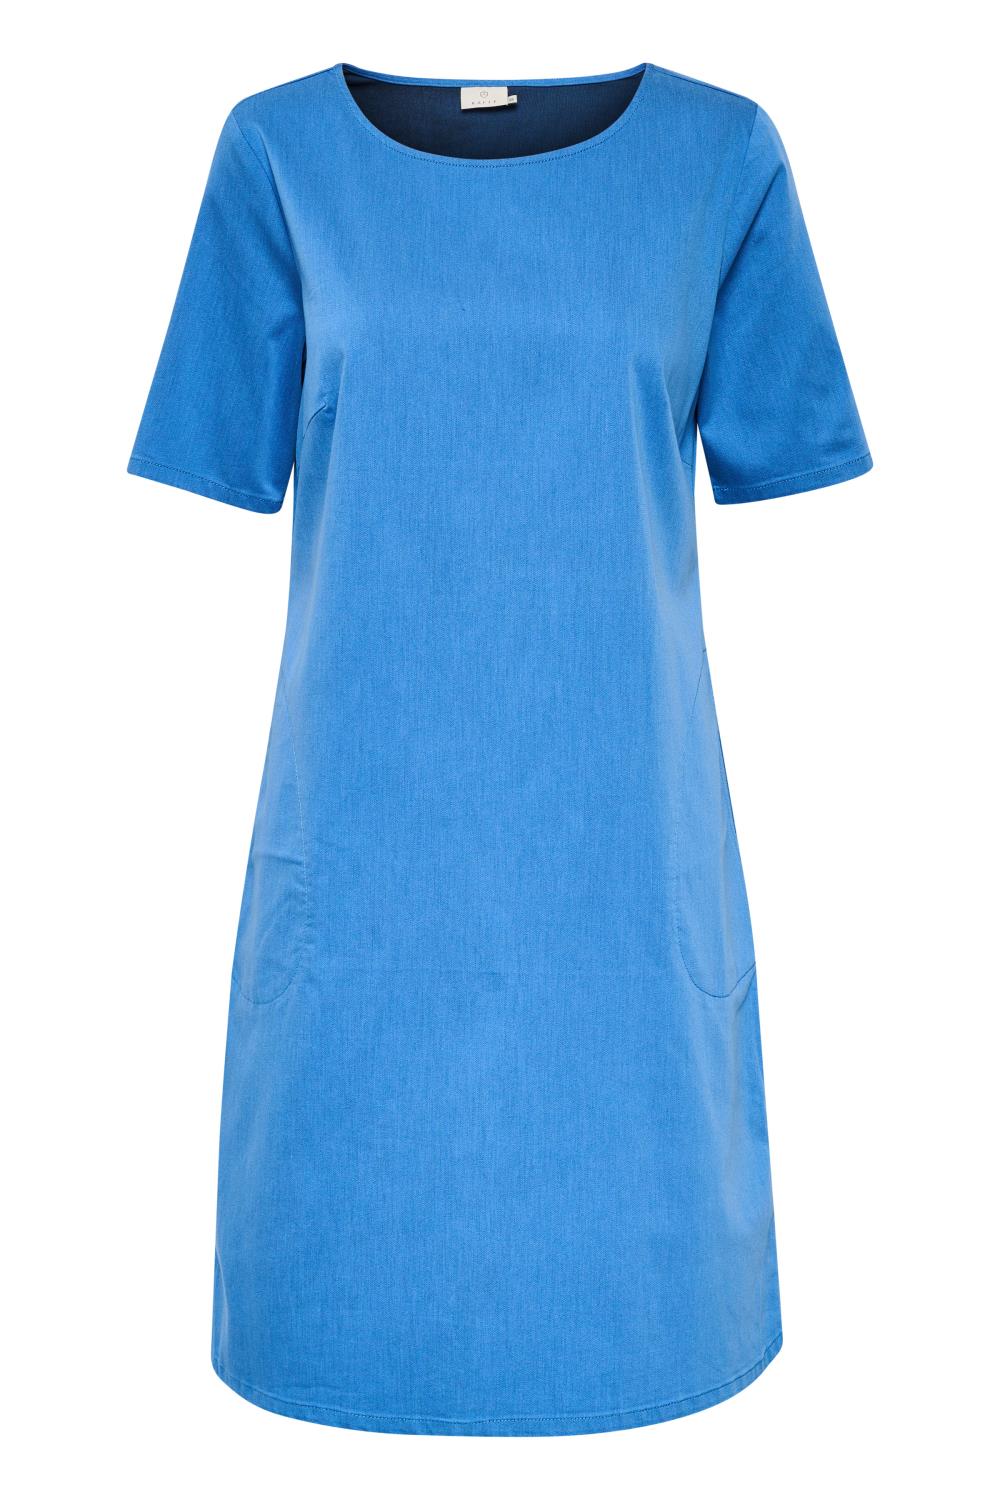 Kaffe Lea Dress, kortemet kjole, blå